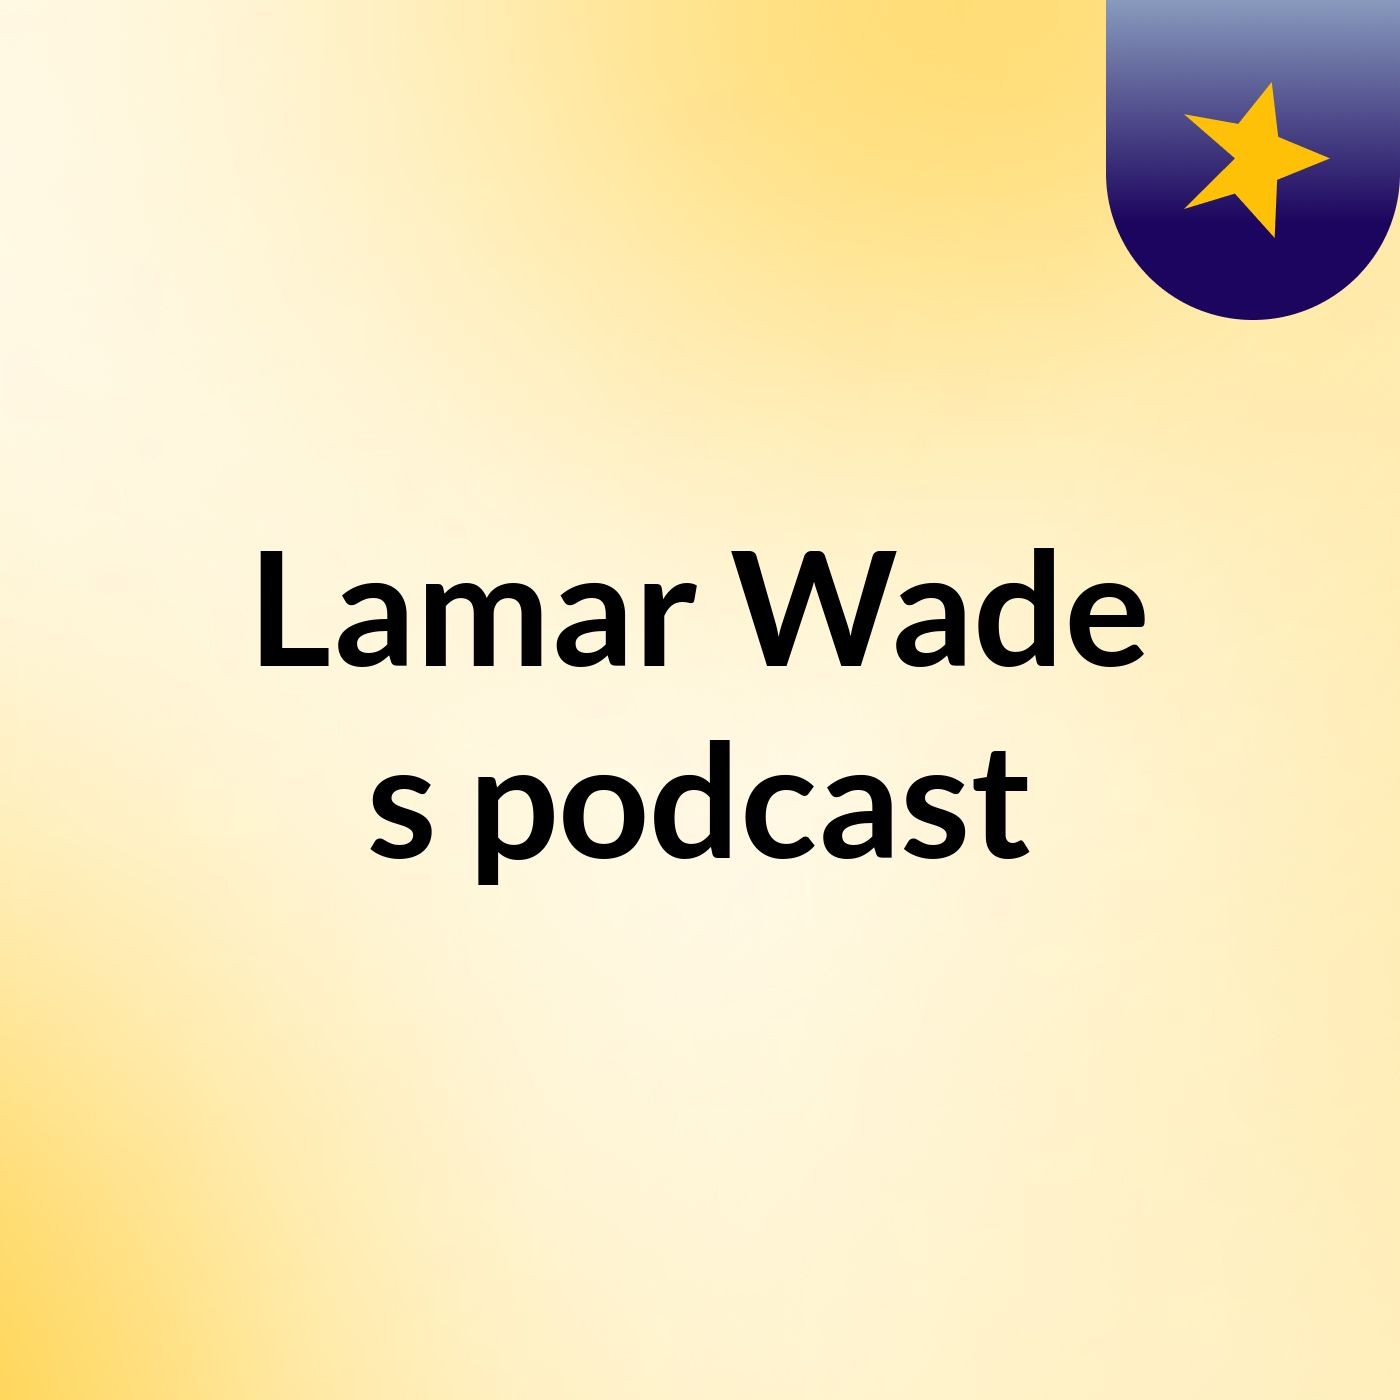 Lamar Wade's podcast